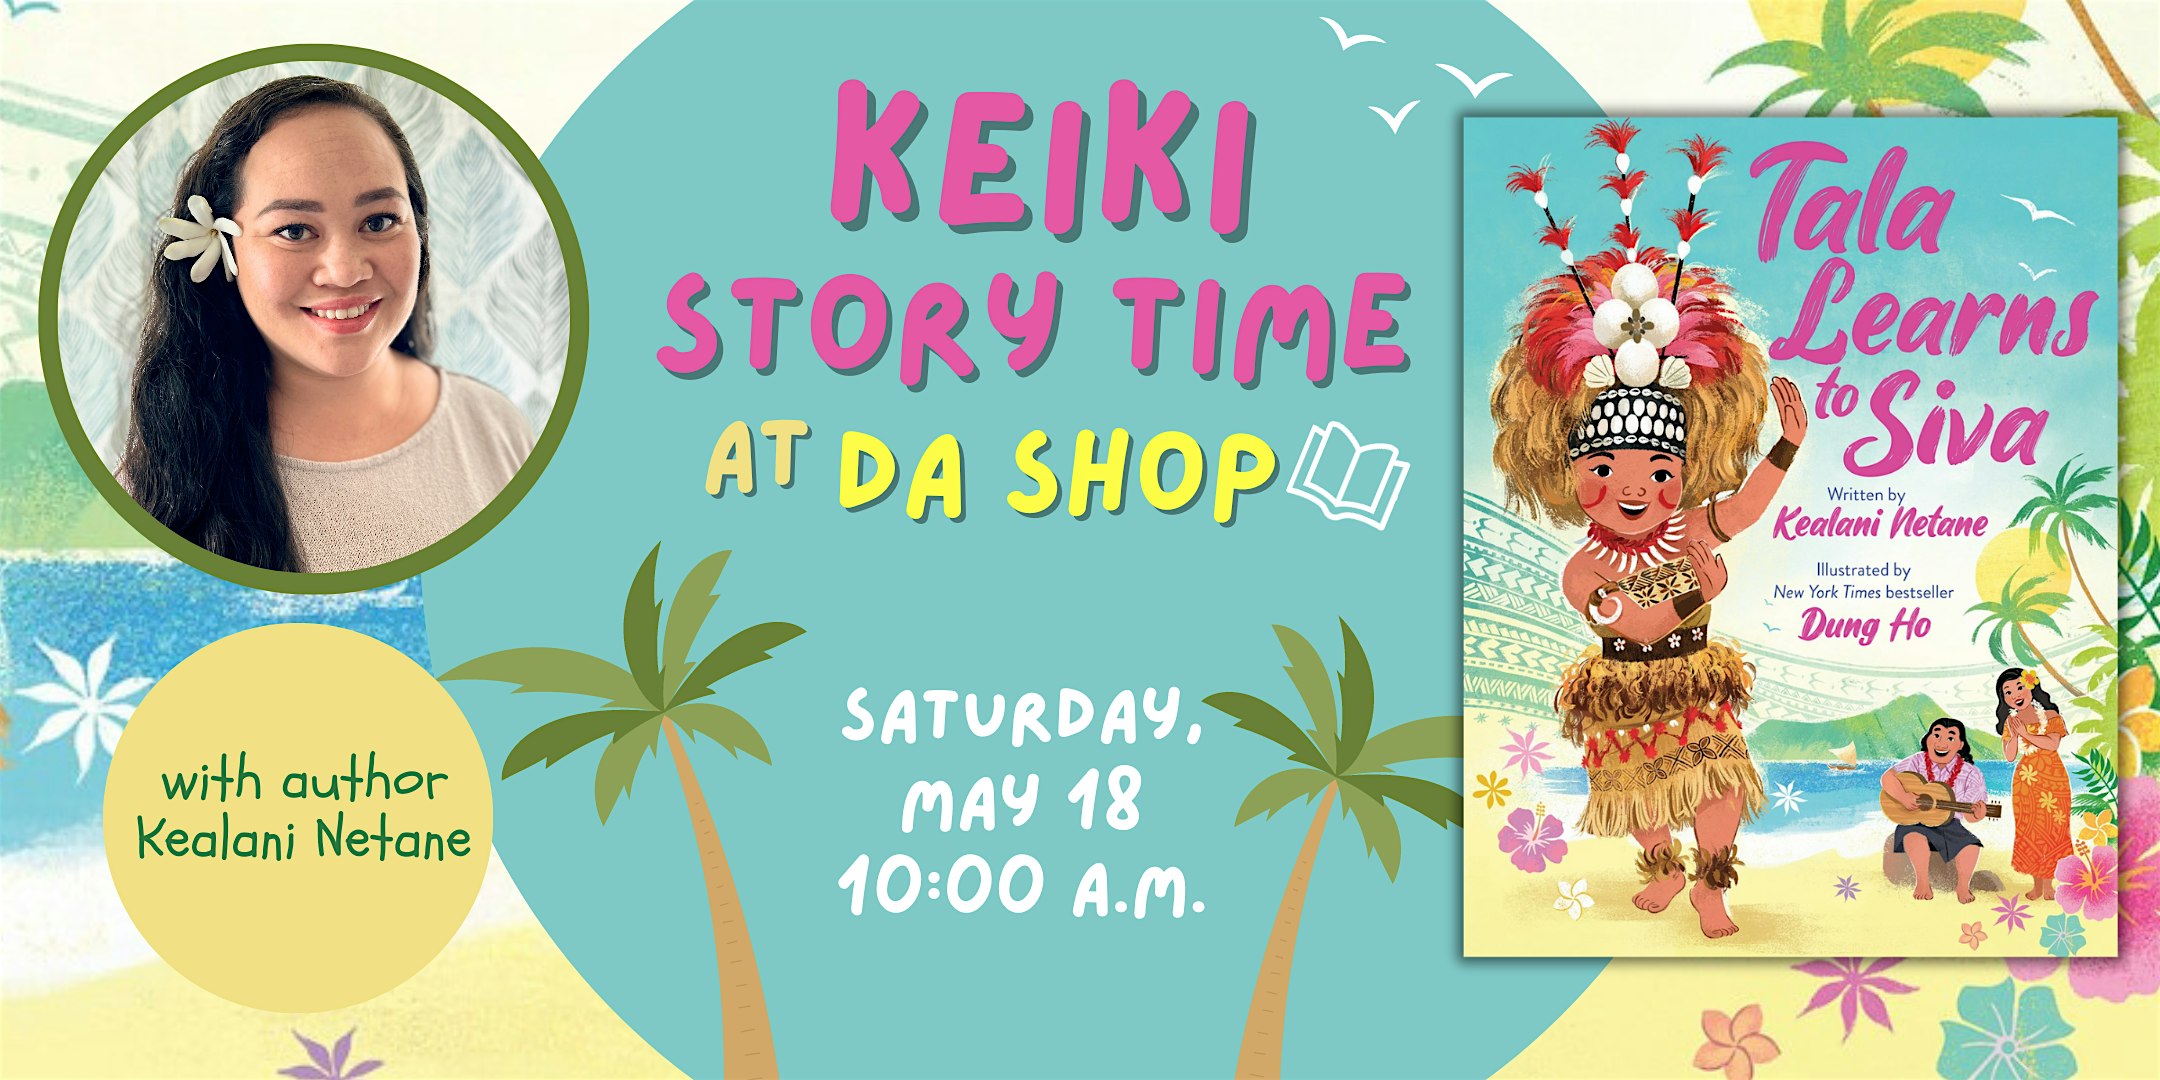 Keiki Story Time at da Shop \u2022 Tala Learns to Siva